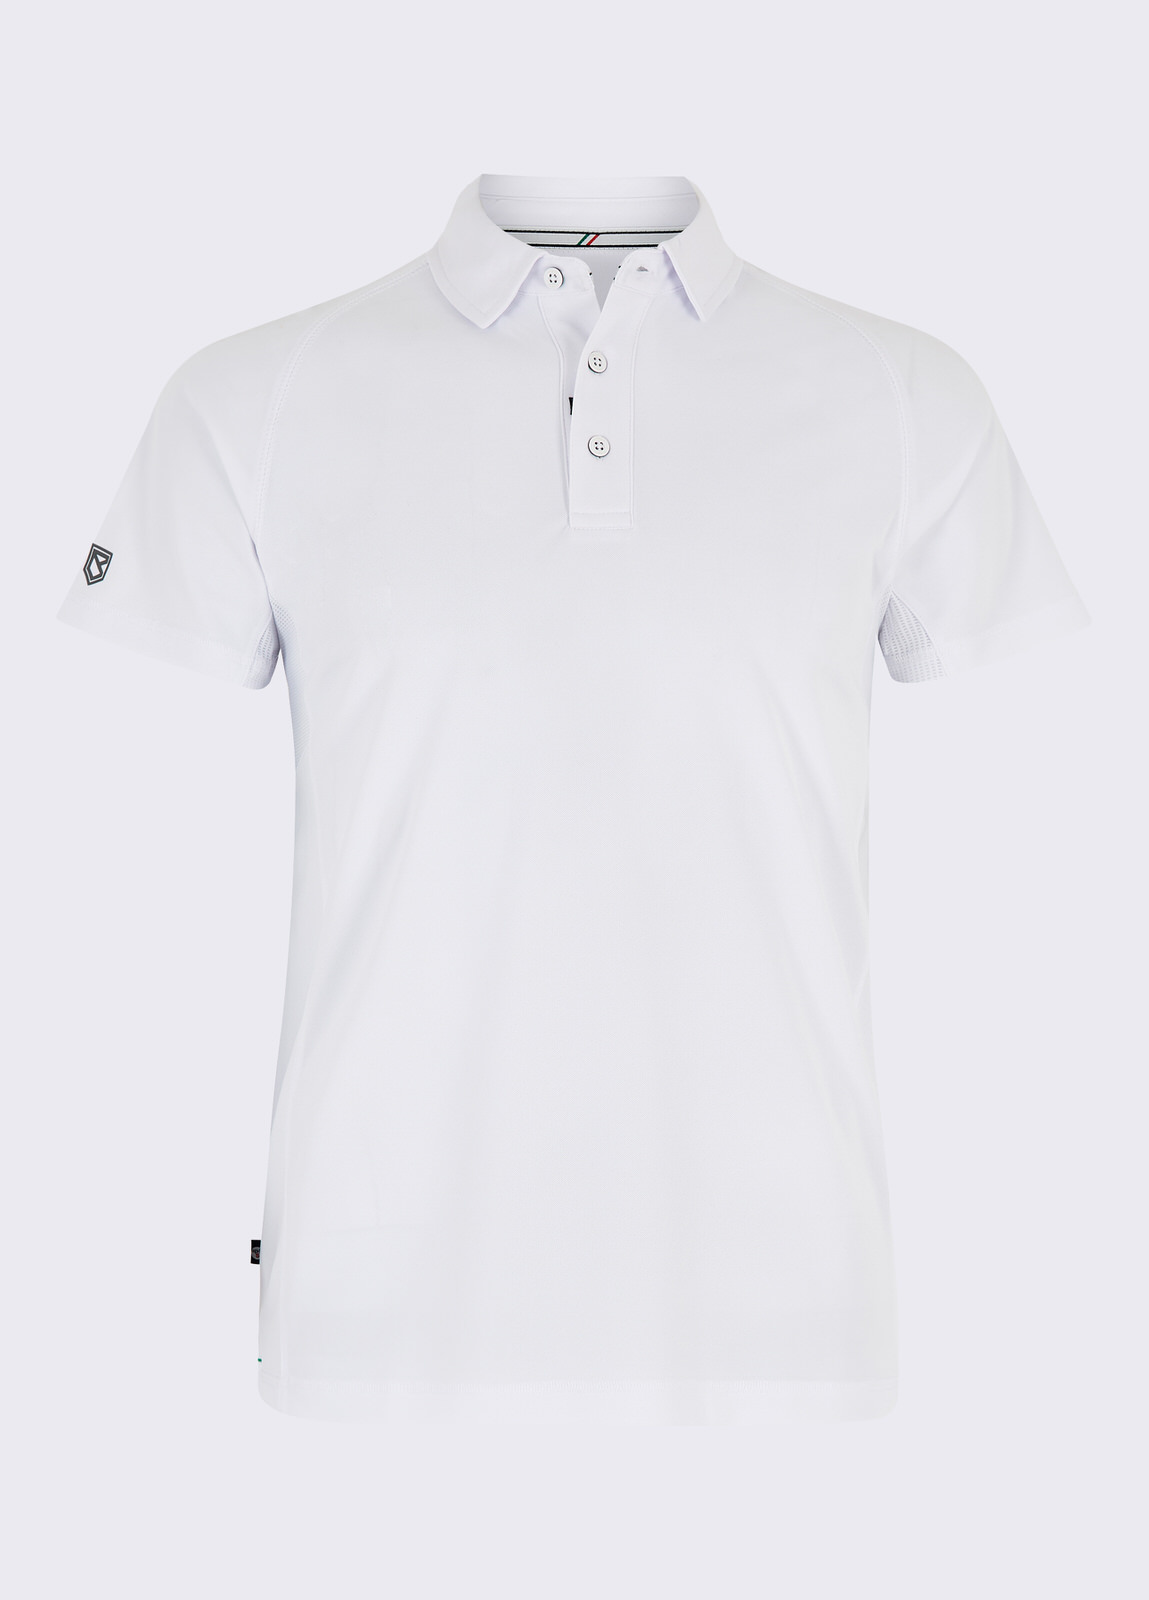 TEE SHIRTS & POLOS Peugeot Sport WRX 2018 - Tee-shirt Homme blanc